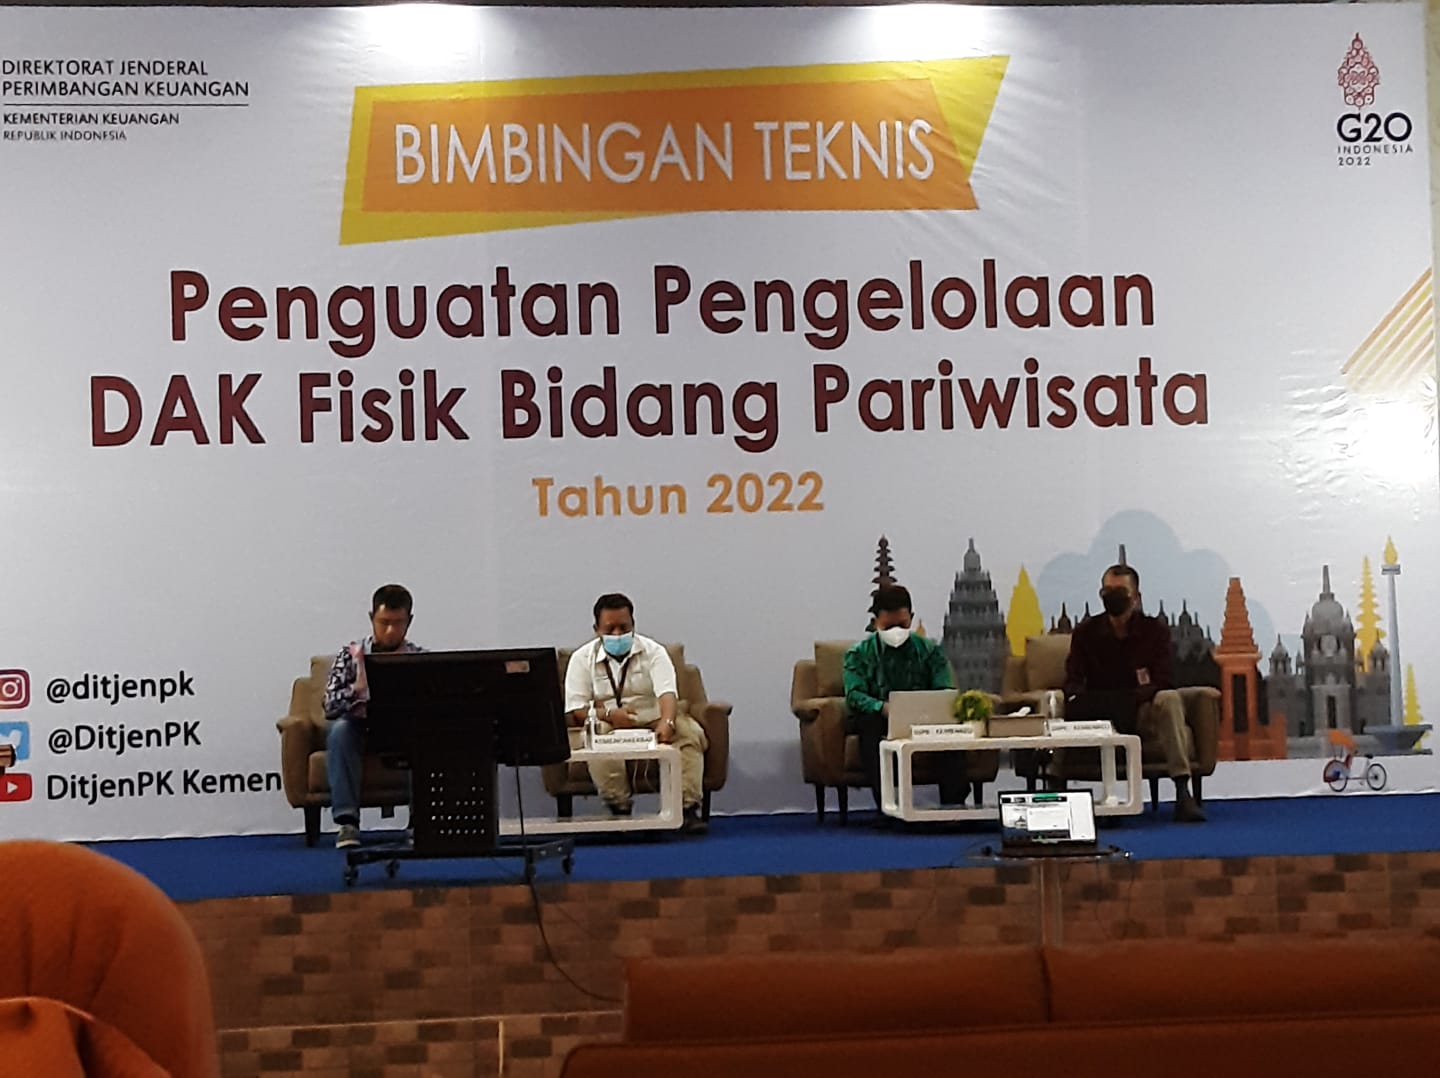 Bimbingan Teknis Penguatan Pengelolaan DAK Fisik Bidang Pariwisata tahun 2022 di Medan